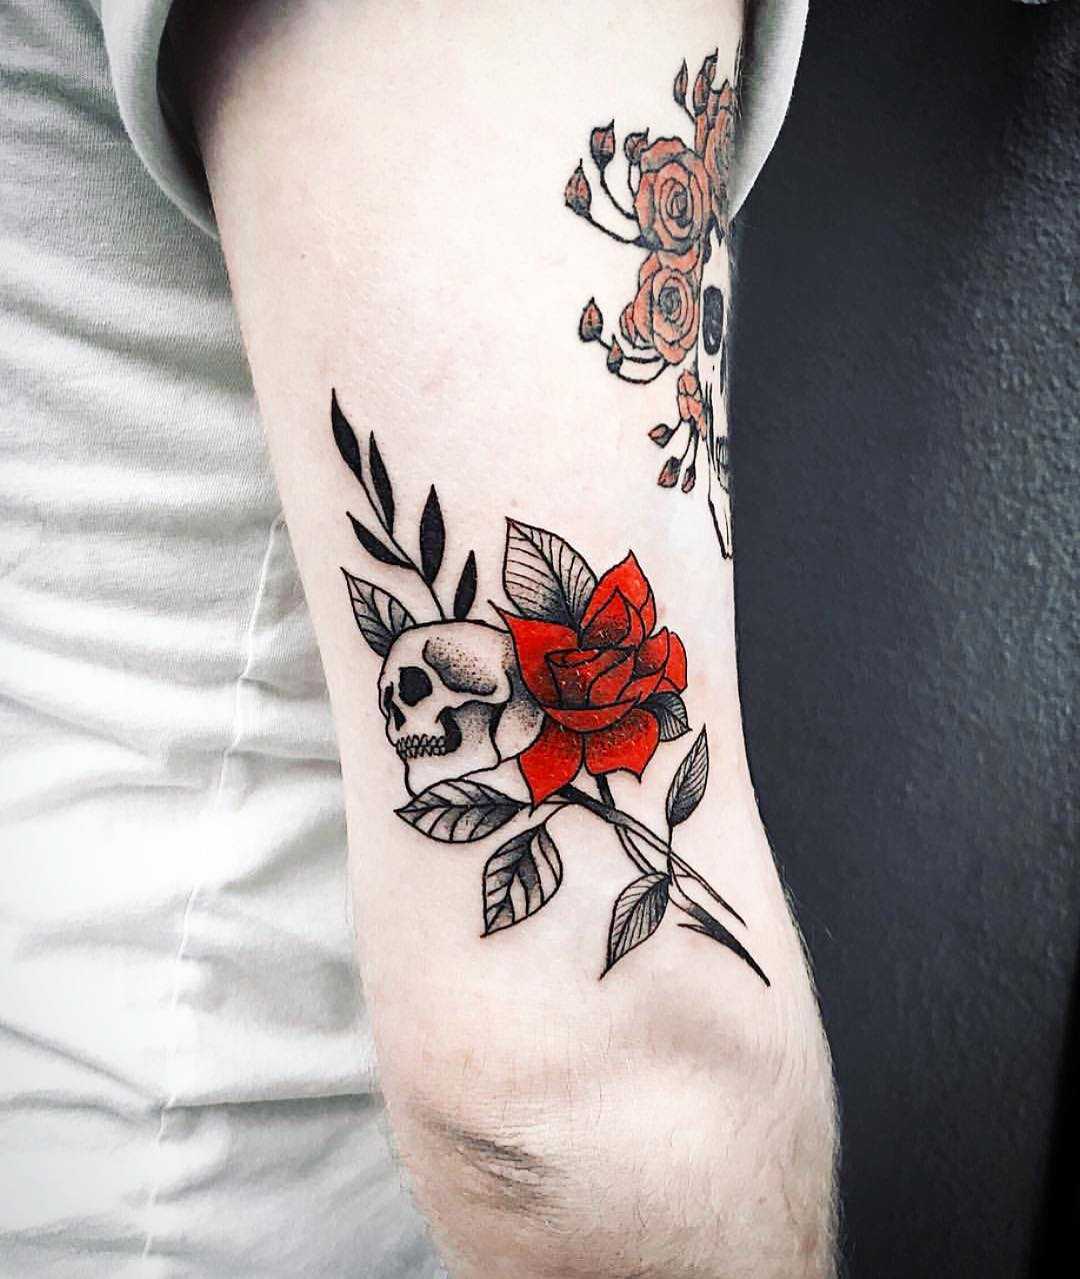 Red rose and skull by Bek